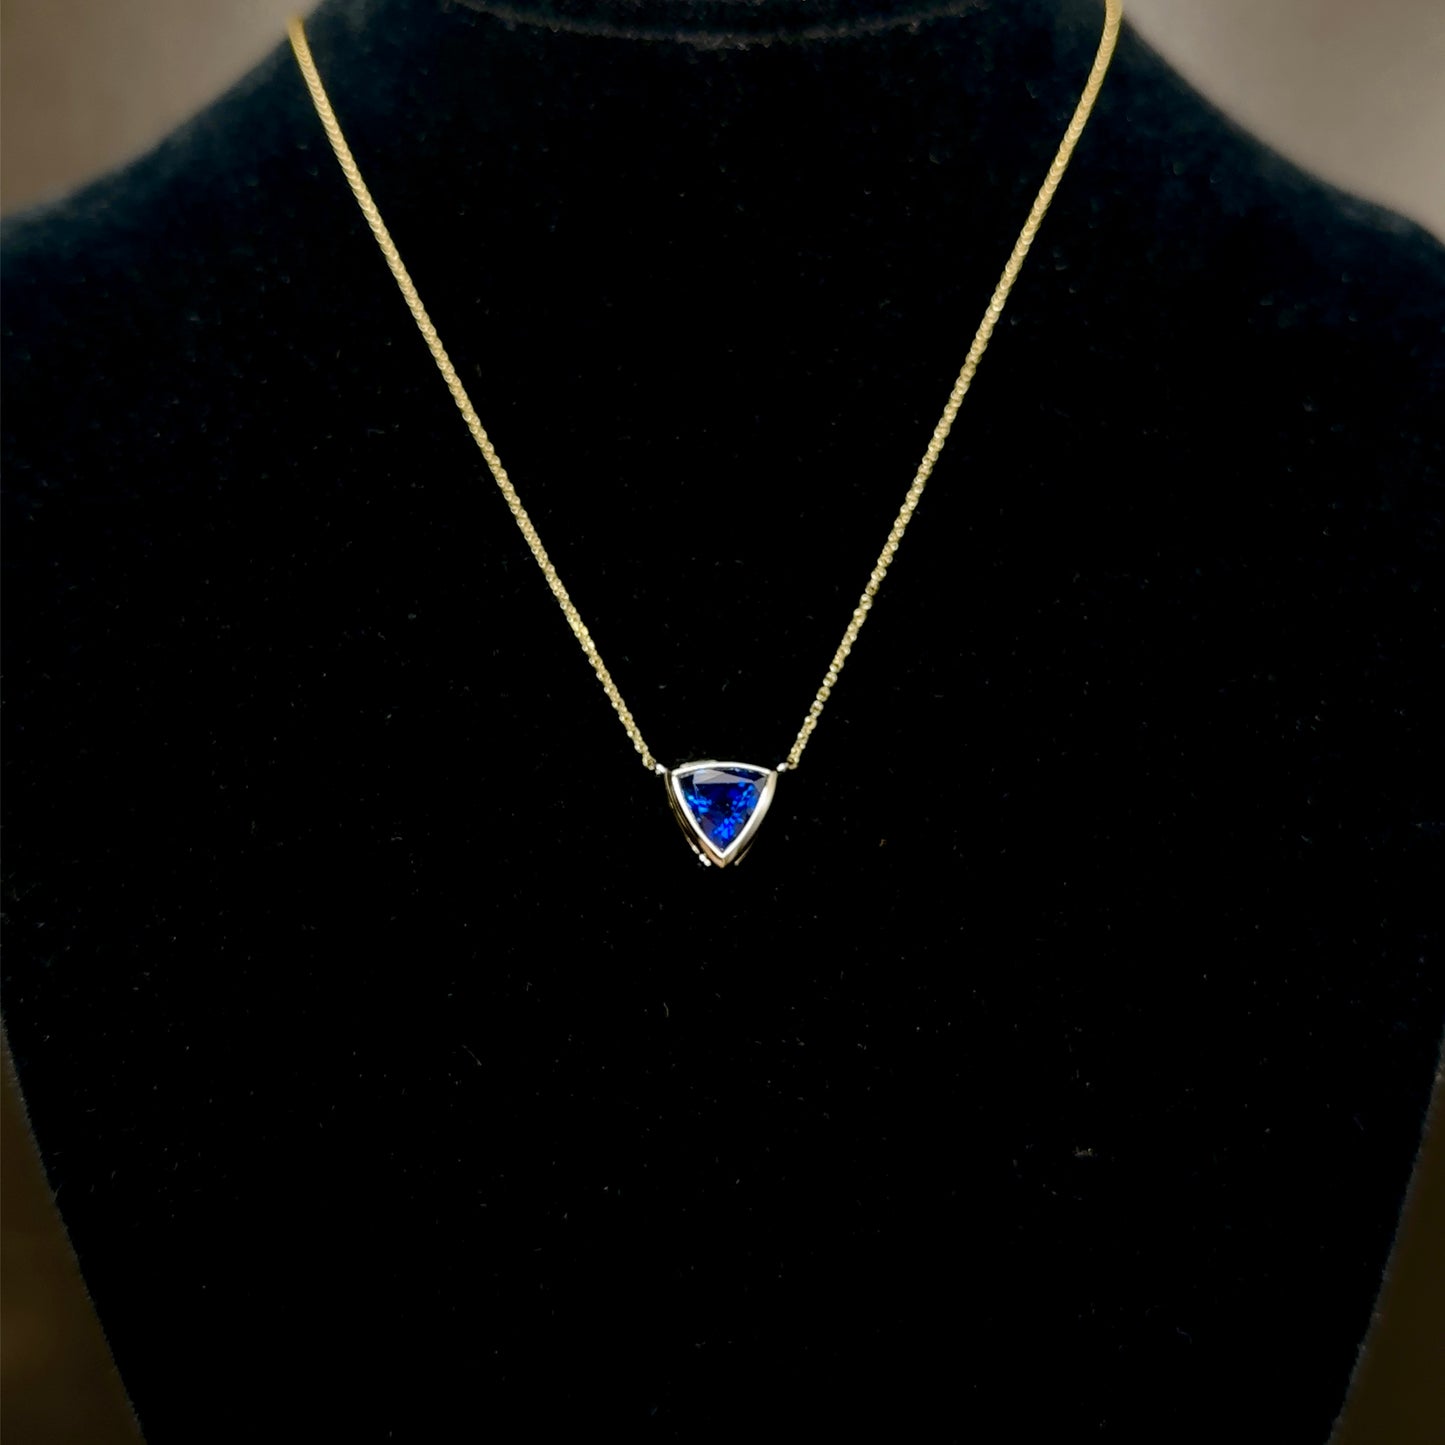 3.26 Carat Trillion Sapphire Pendant - 14k Gold